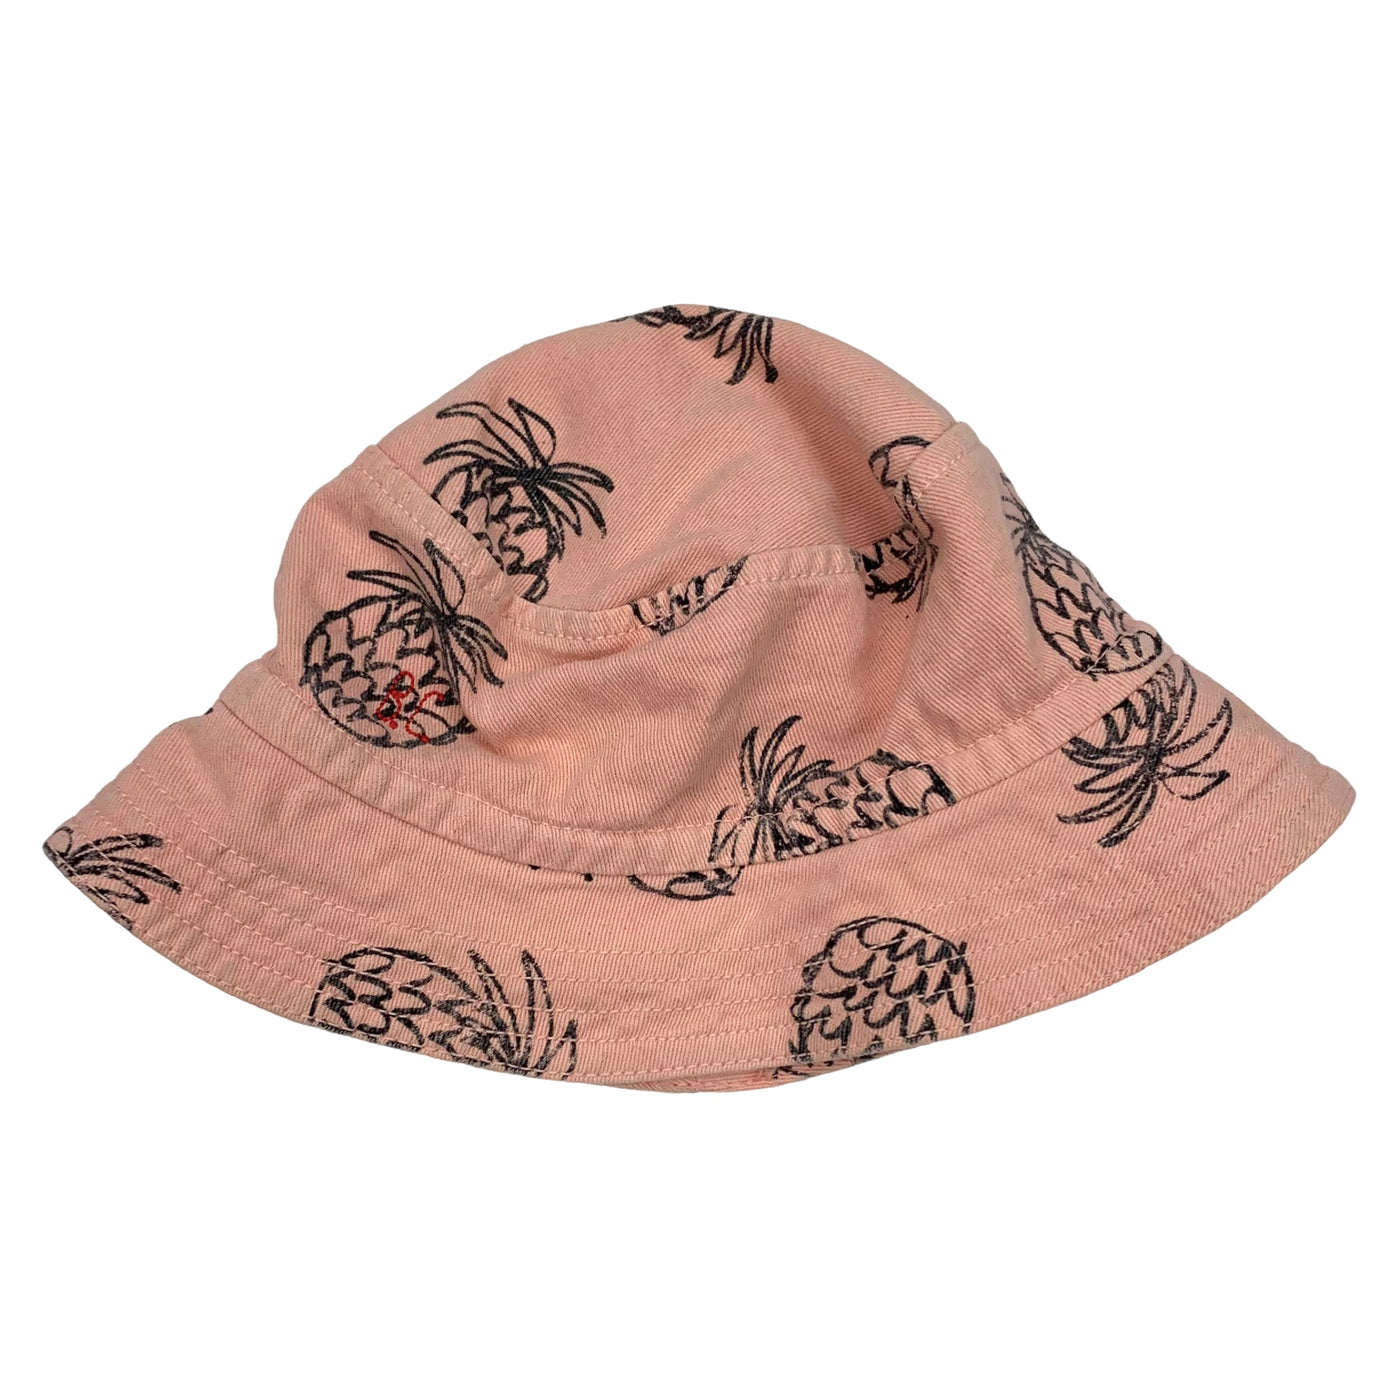 Bobo choses bucket hat light pink pineapple print size baby (46cm)